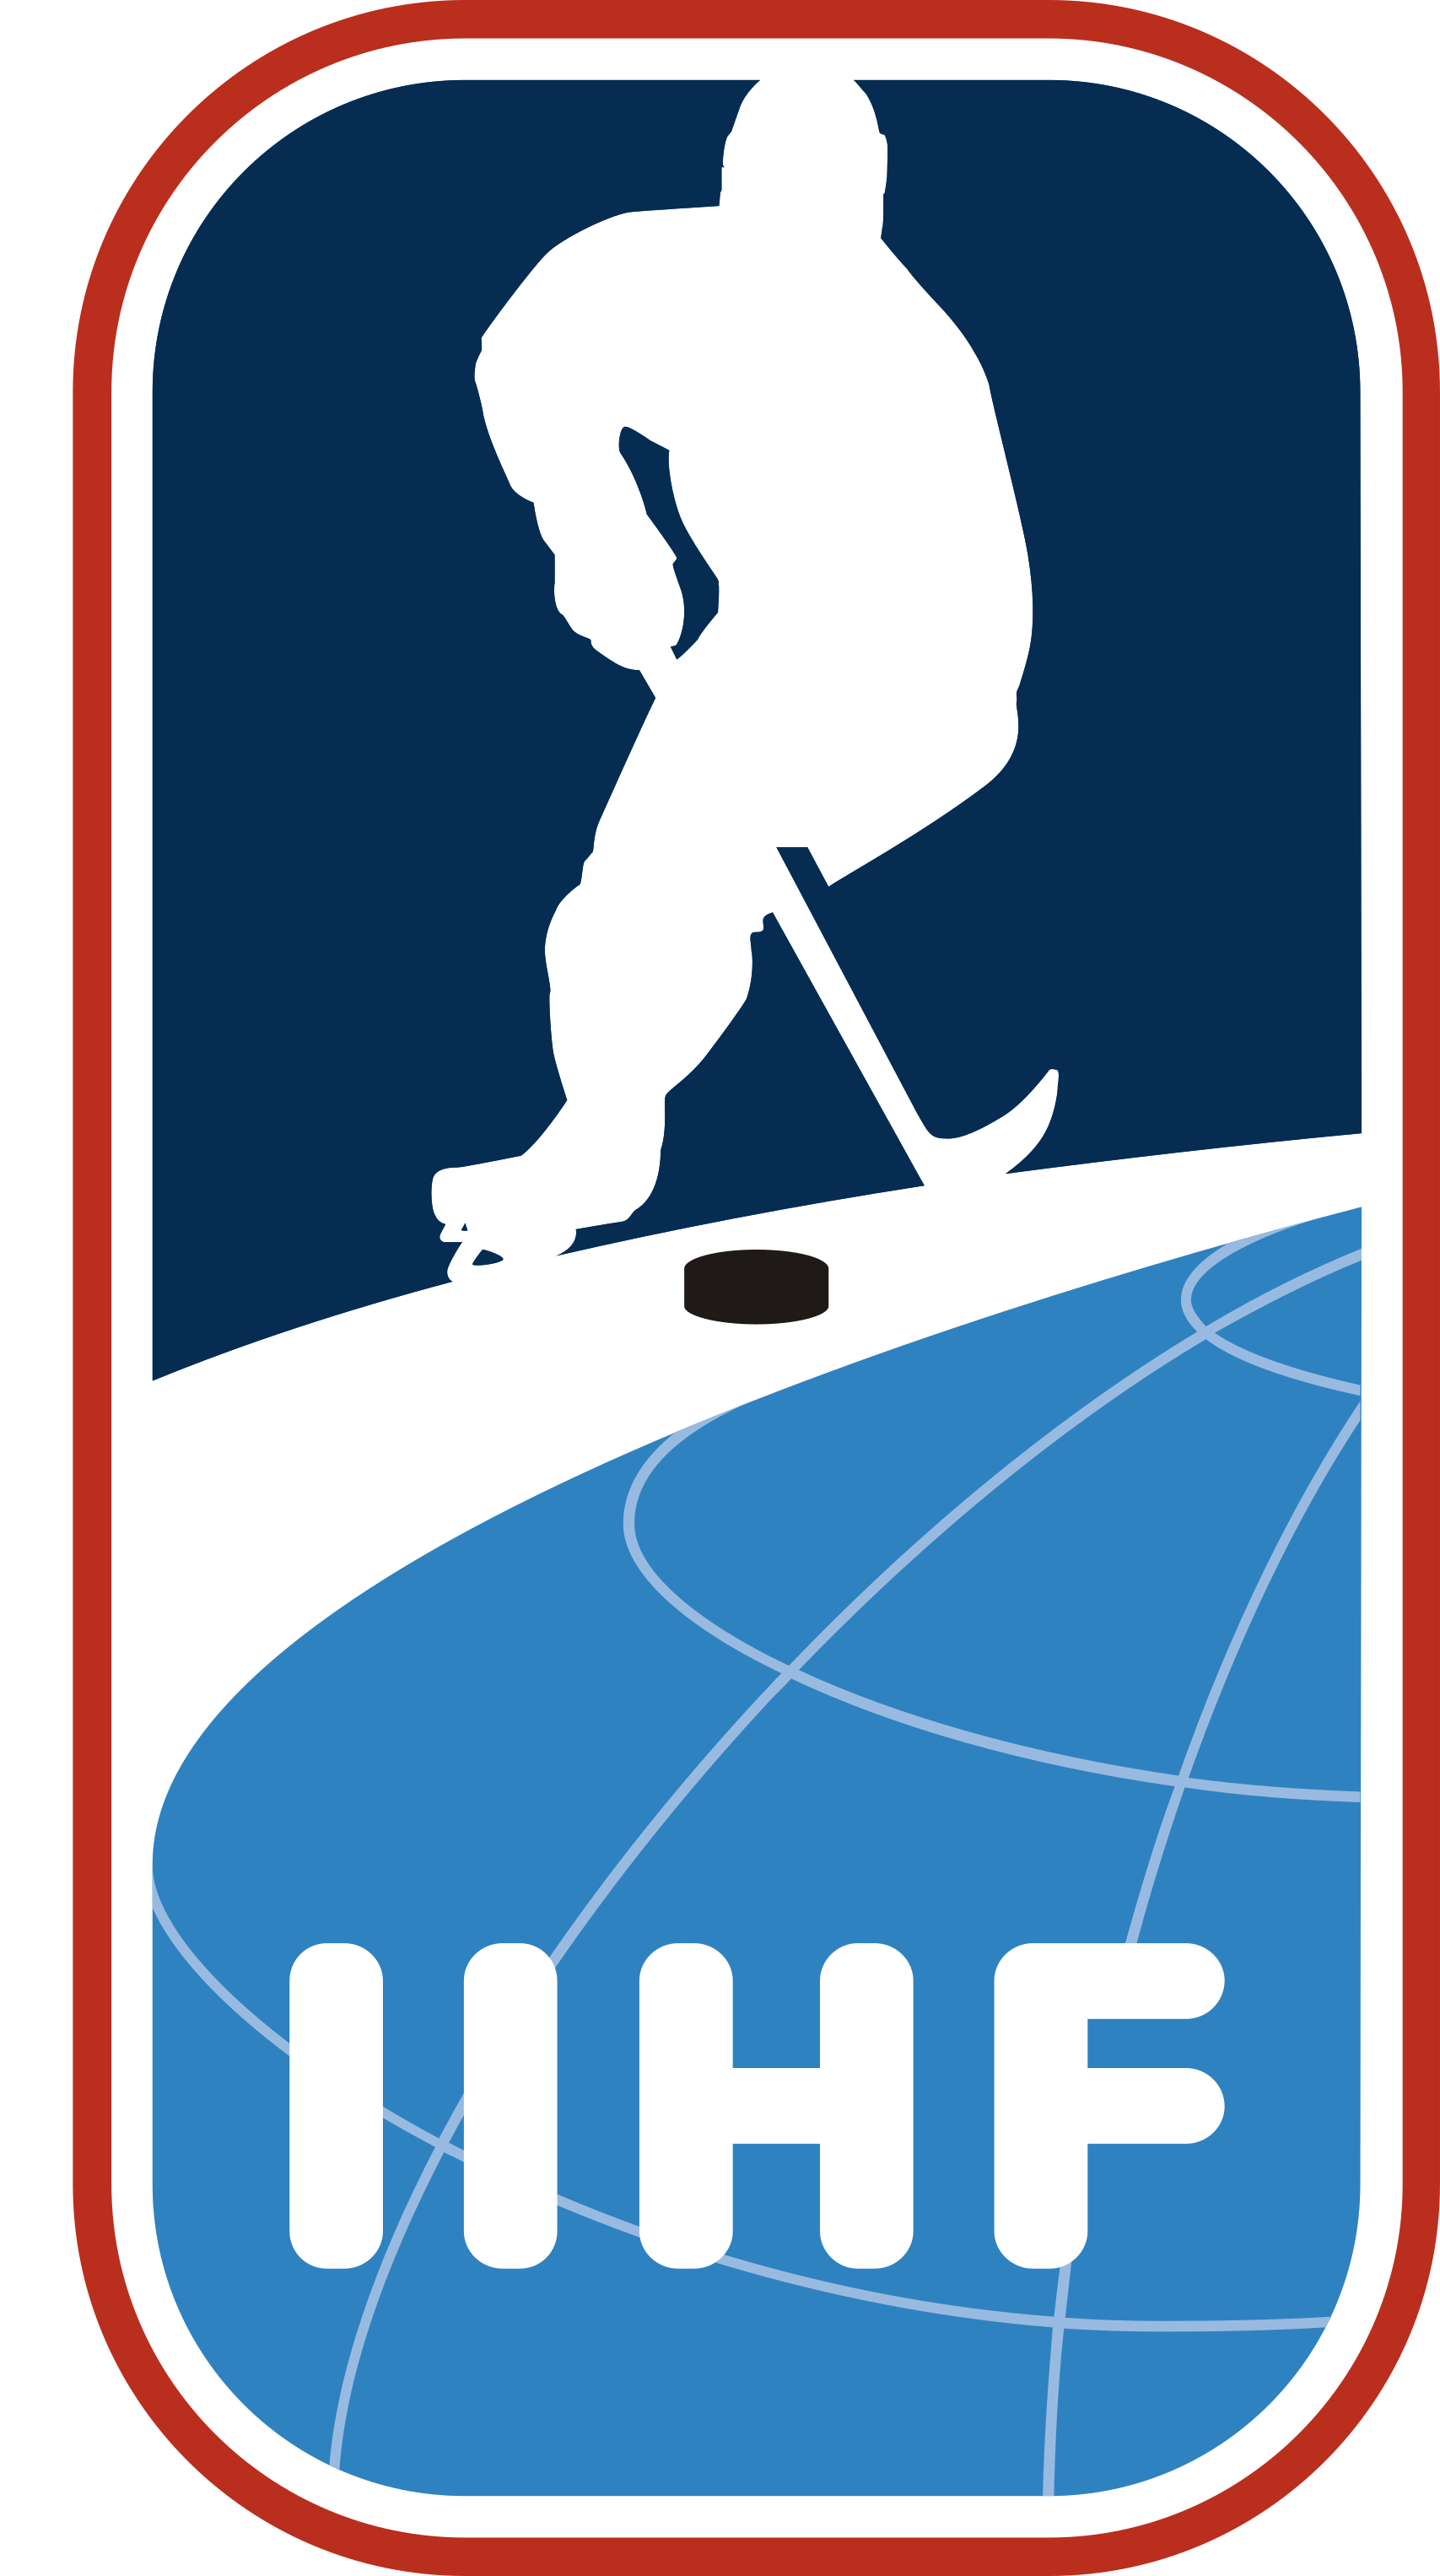 International Ice Hockey Federation (IIHF)